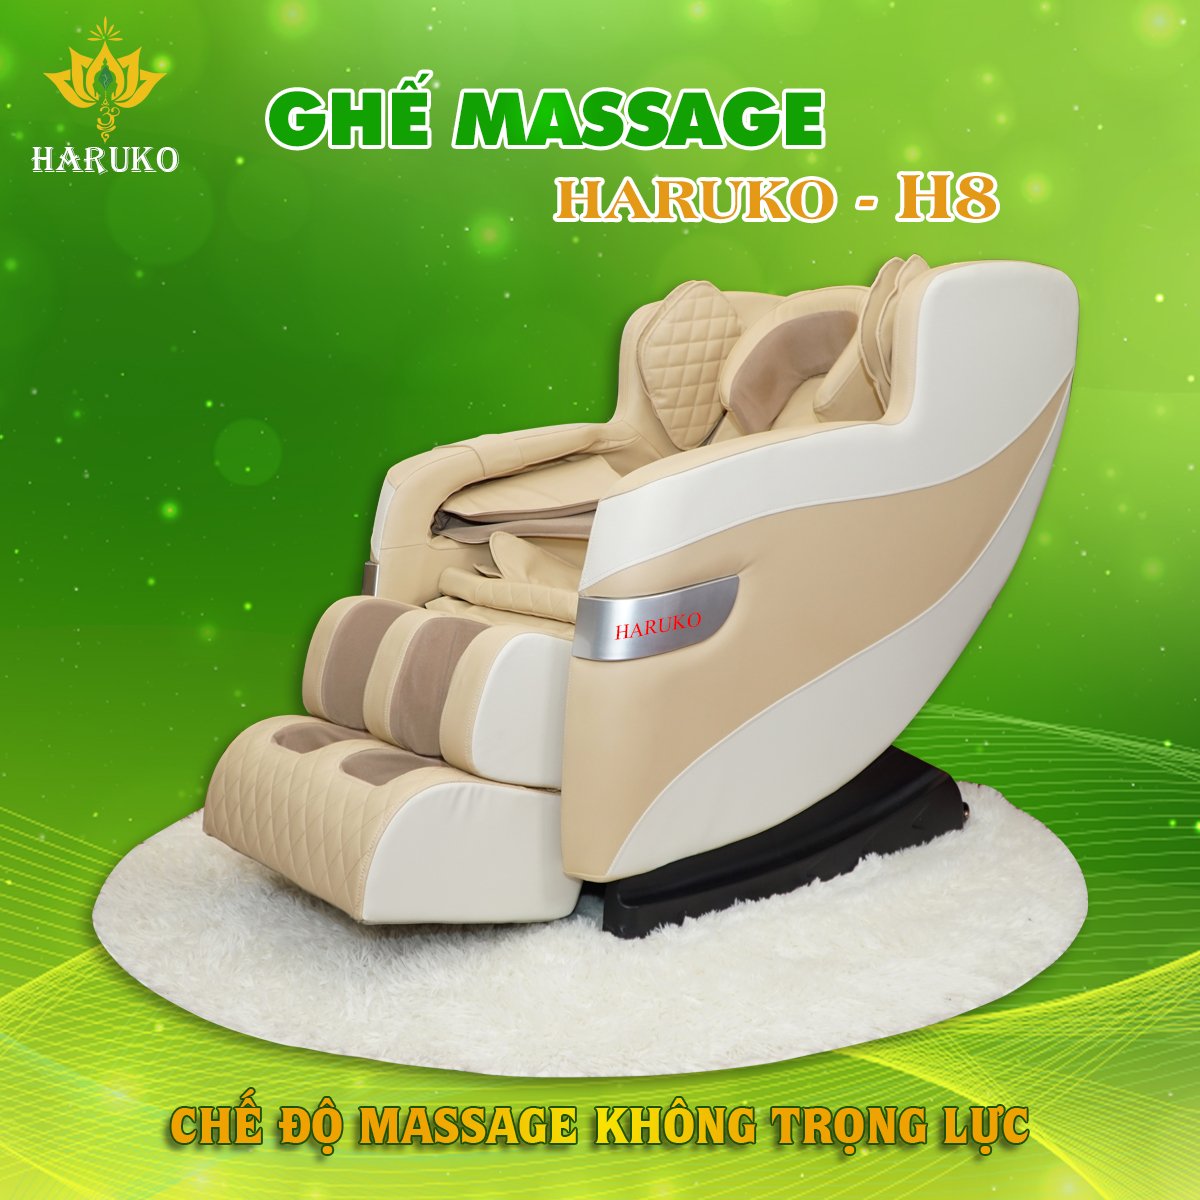 ghe-massage-haruko-H8-1.jpg